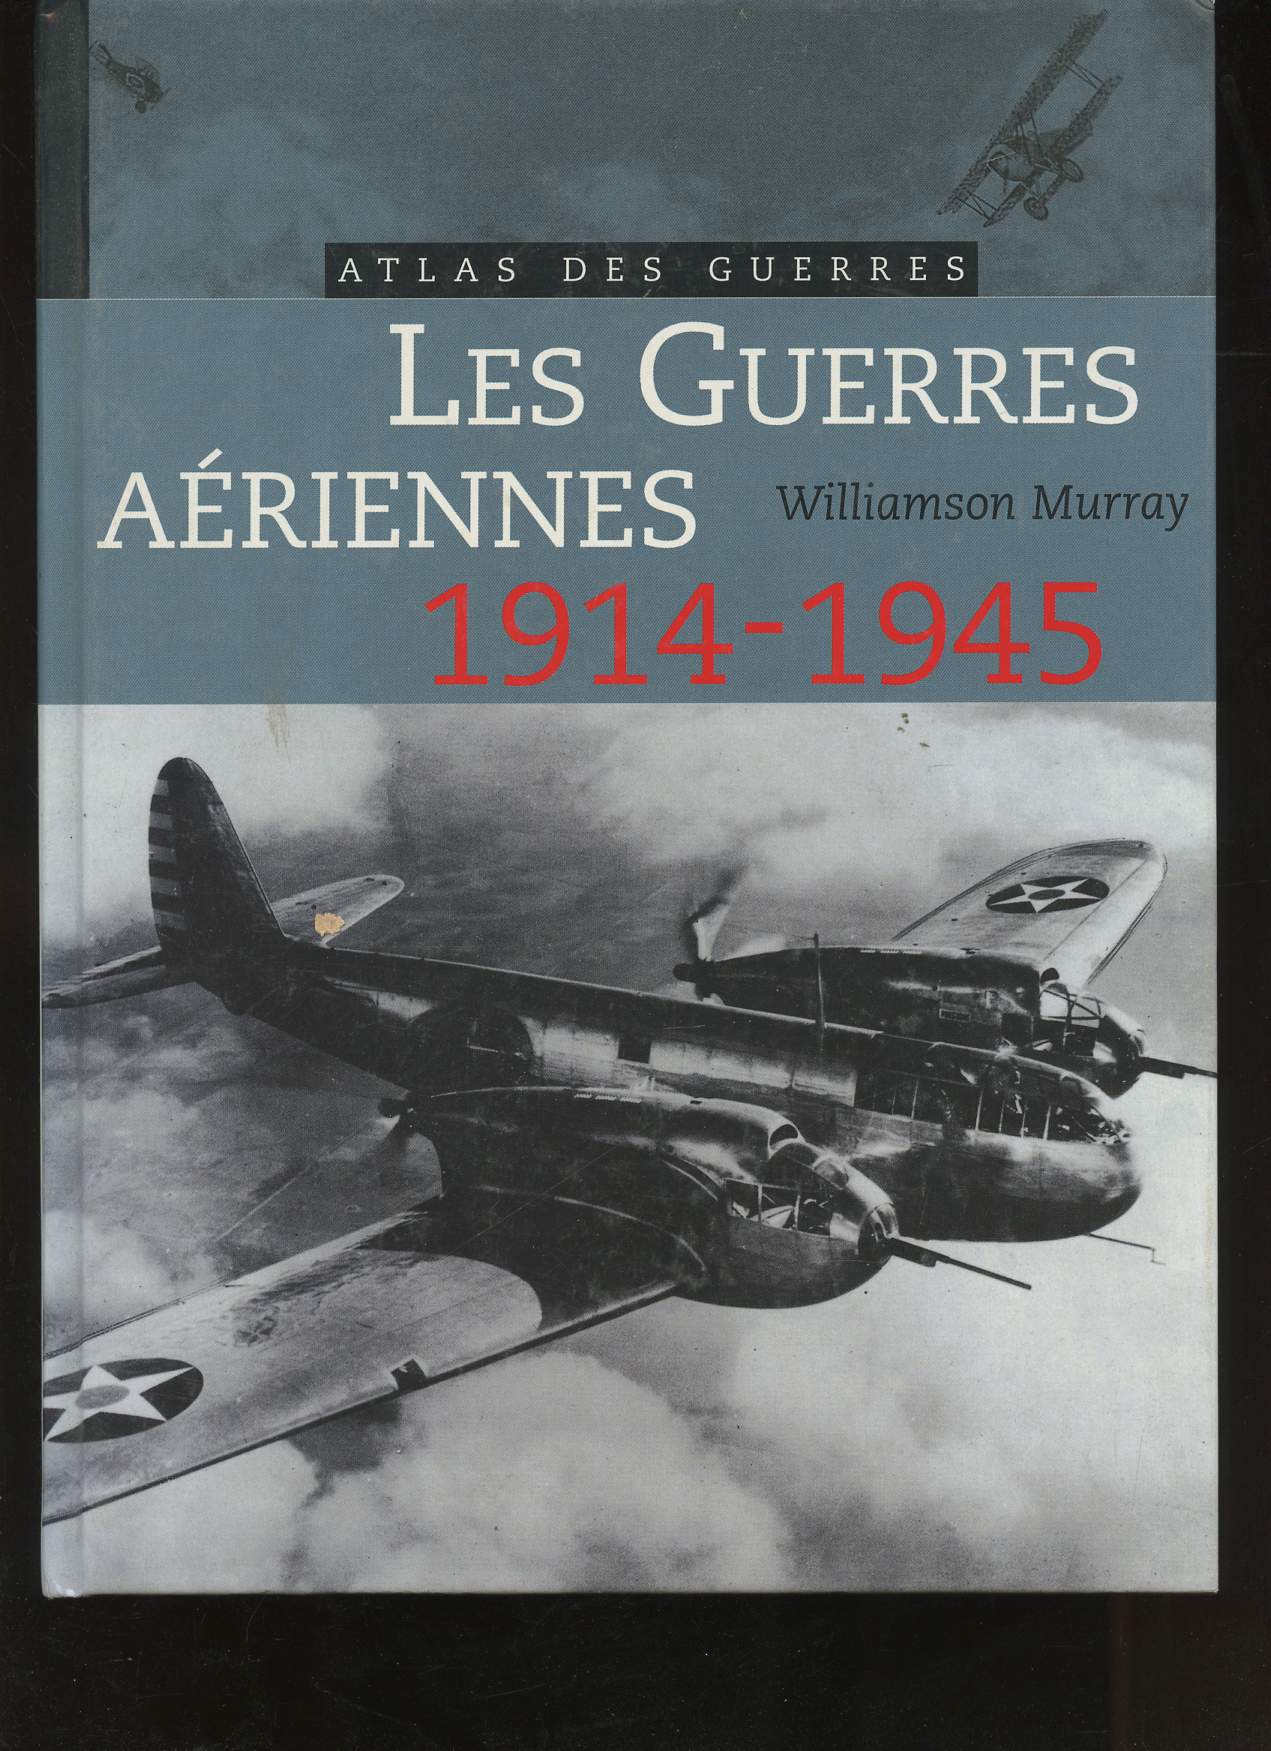 Les Guerres ariennes, 1914-1945. Atlas des Guerres.